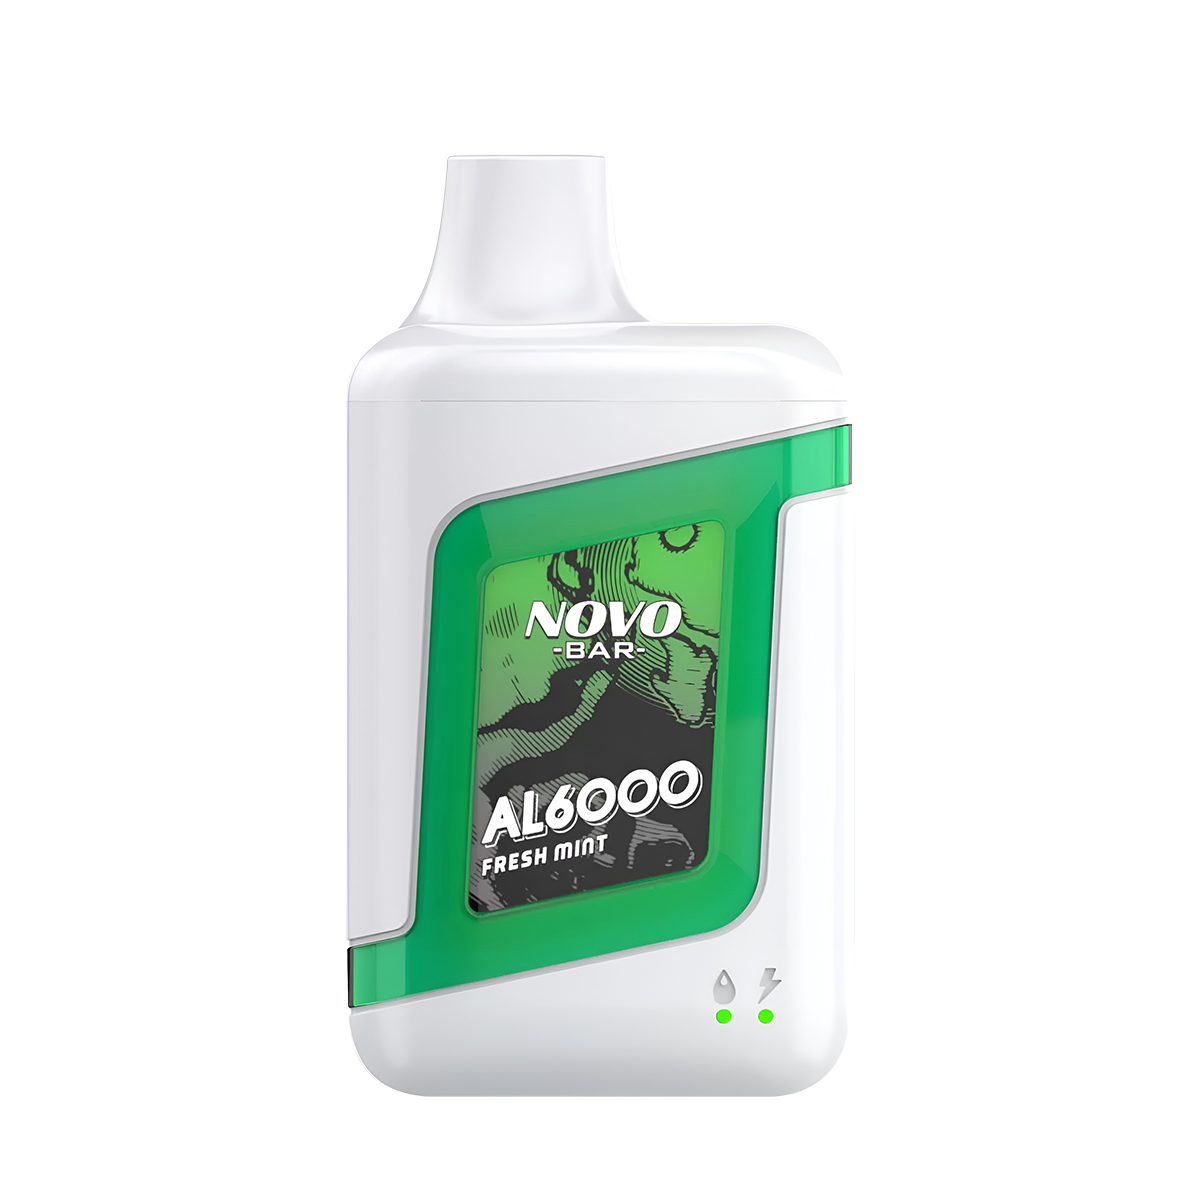 Novo Bar AL6000 Disposable Vape Fresh Mint  